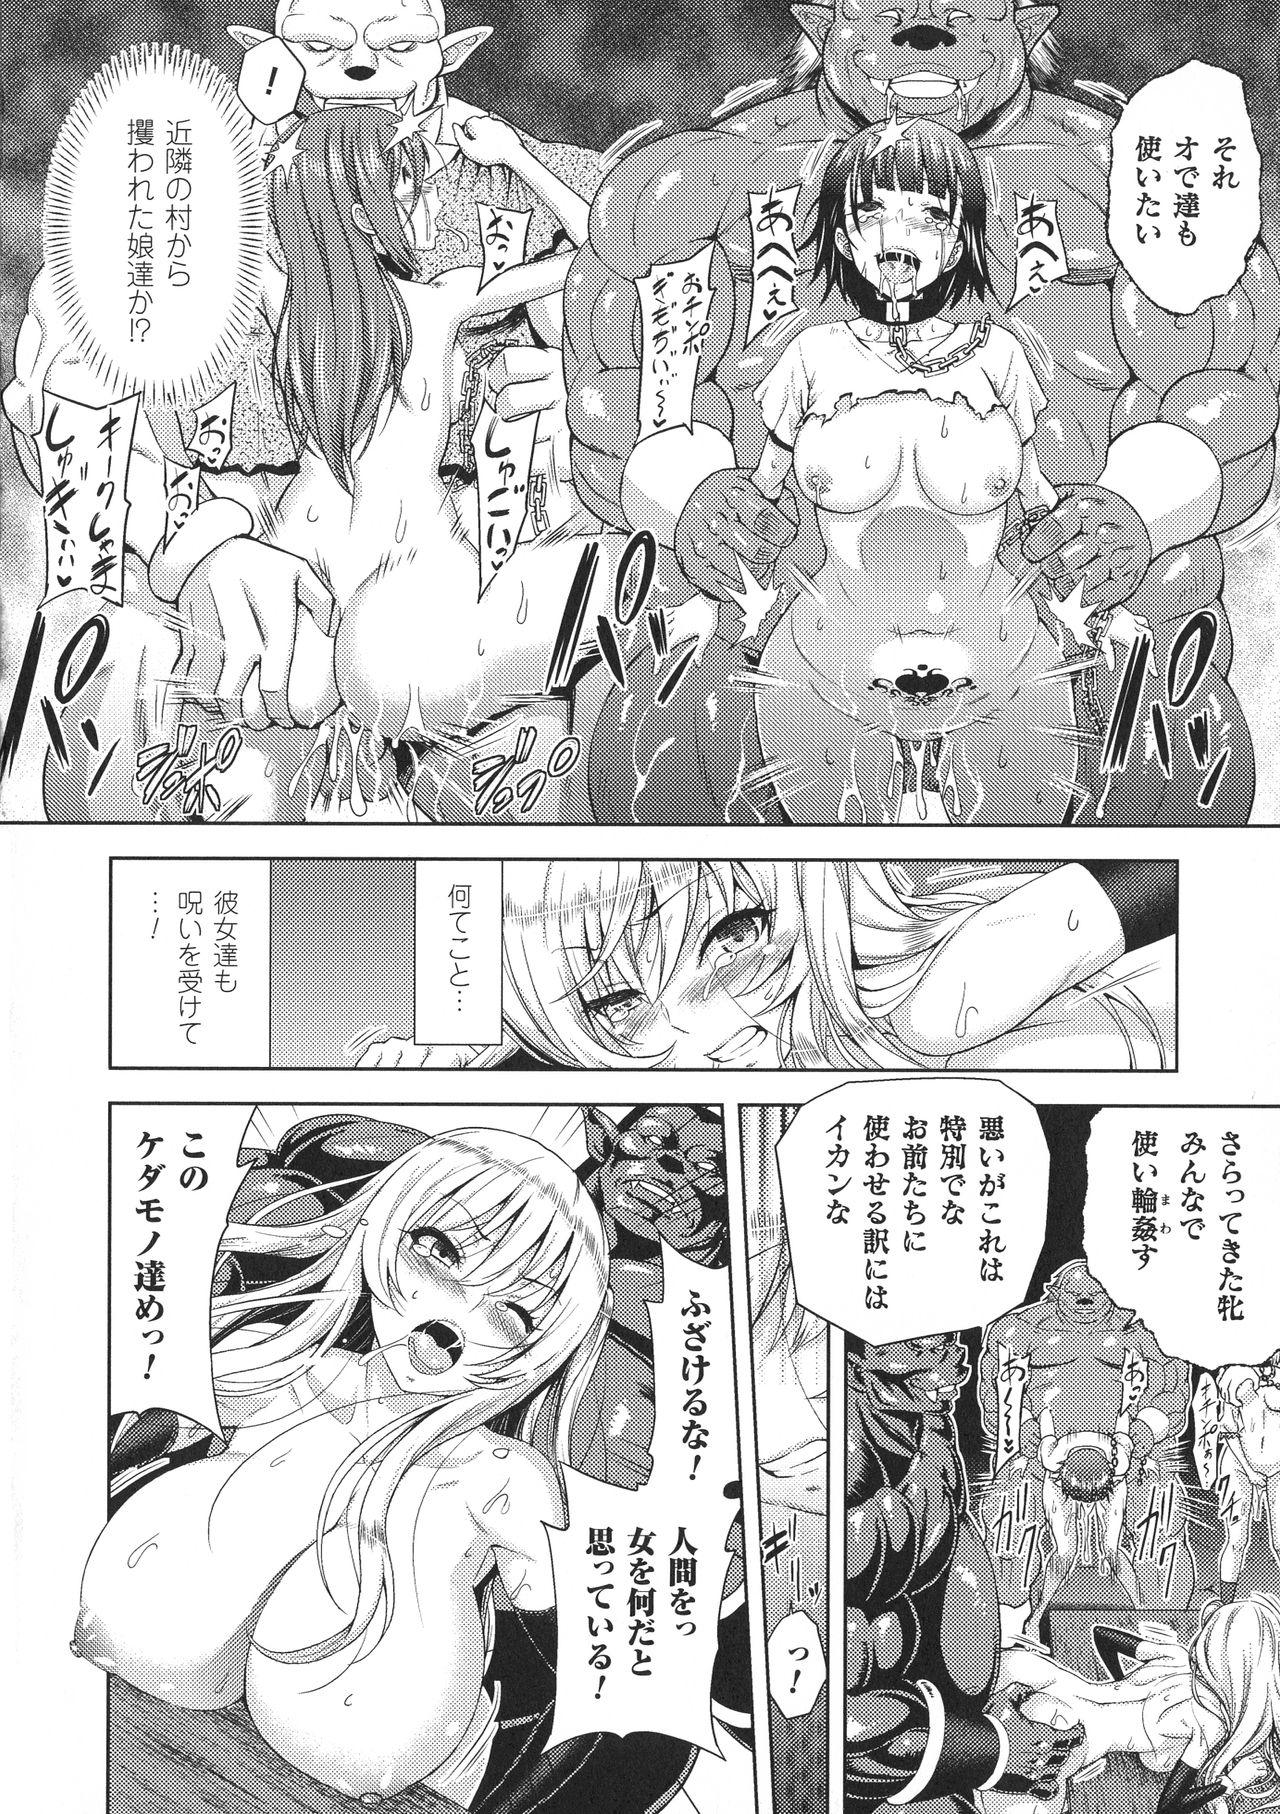 Seigi no Heroine Kangoku File DX Vol. 8 27